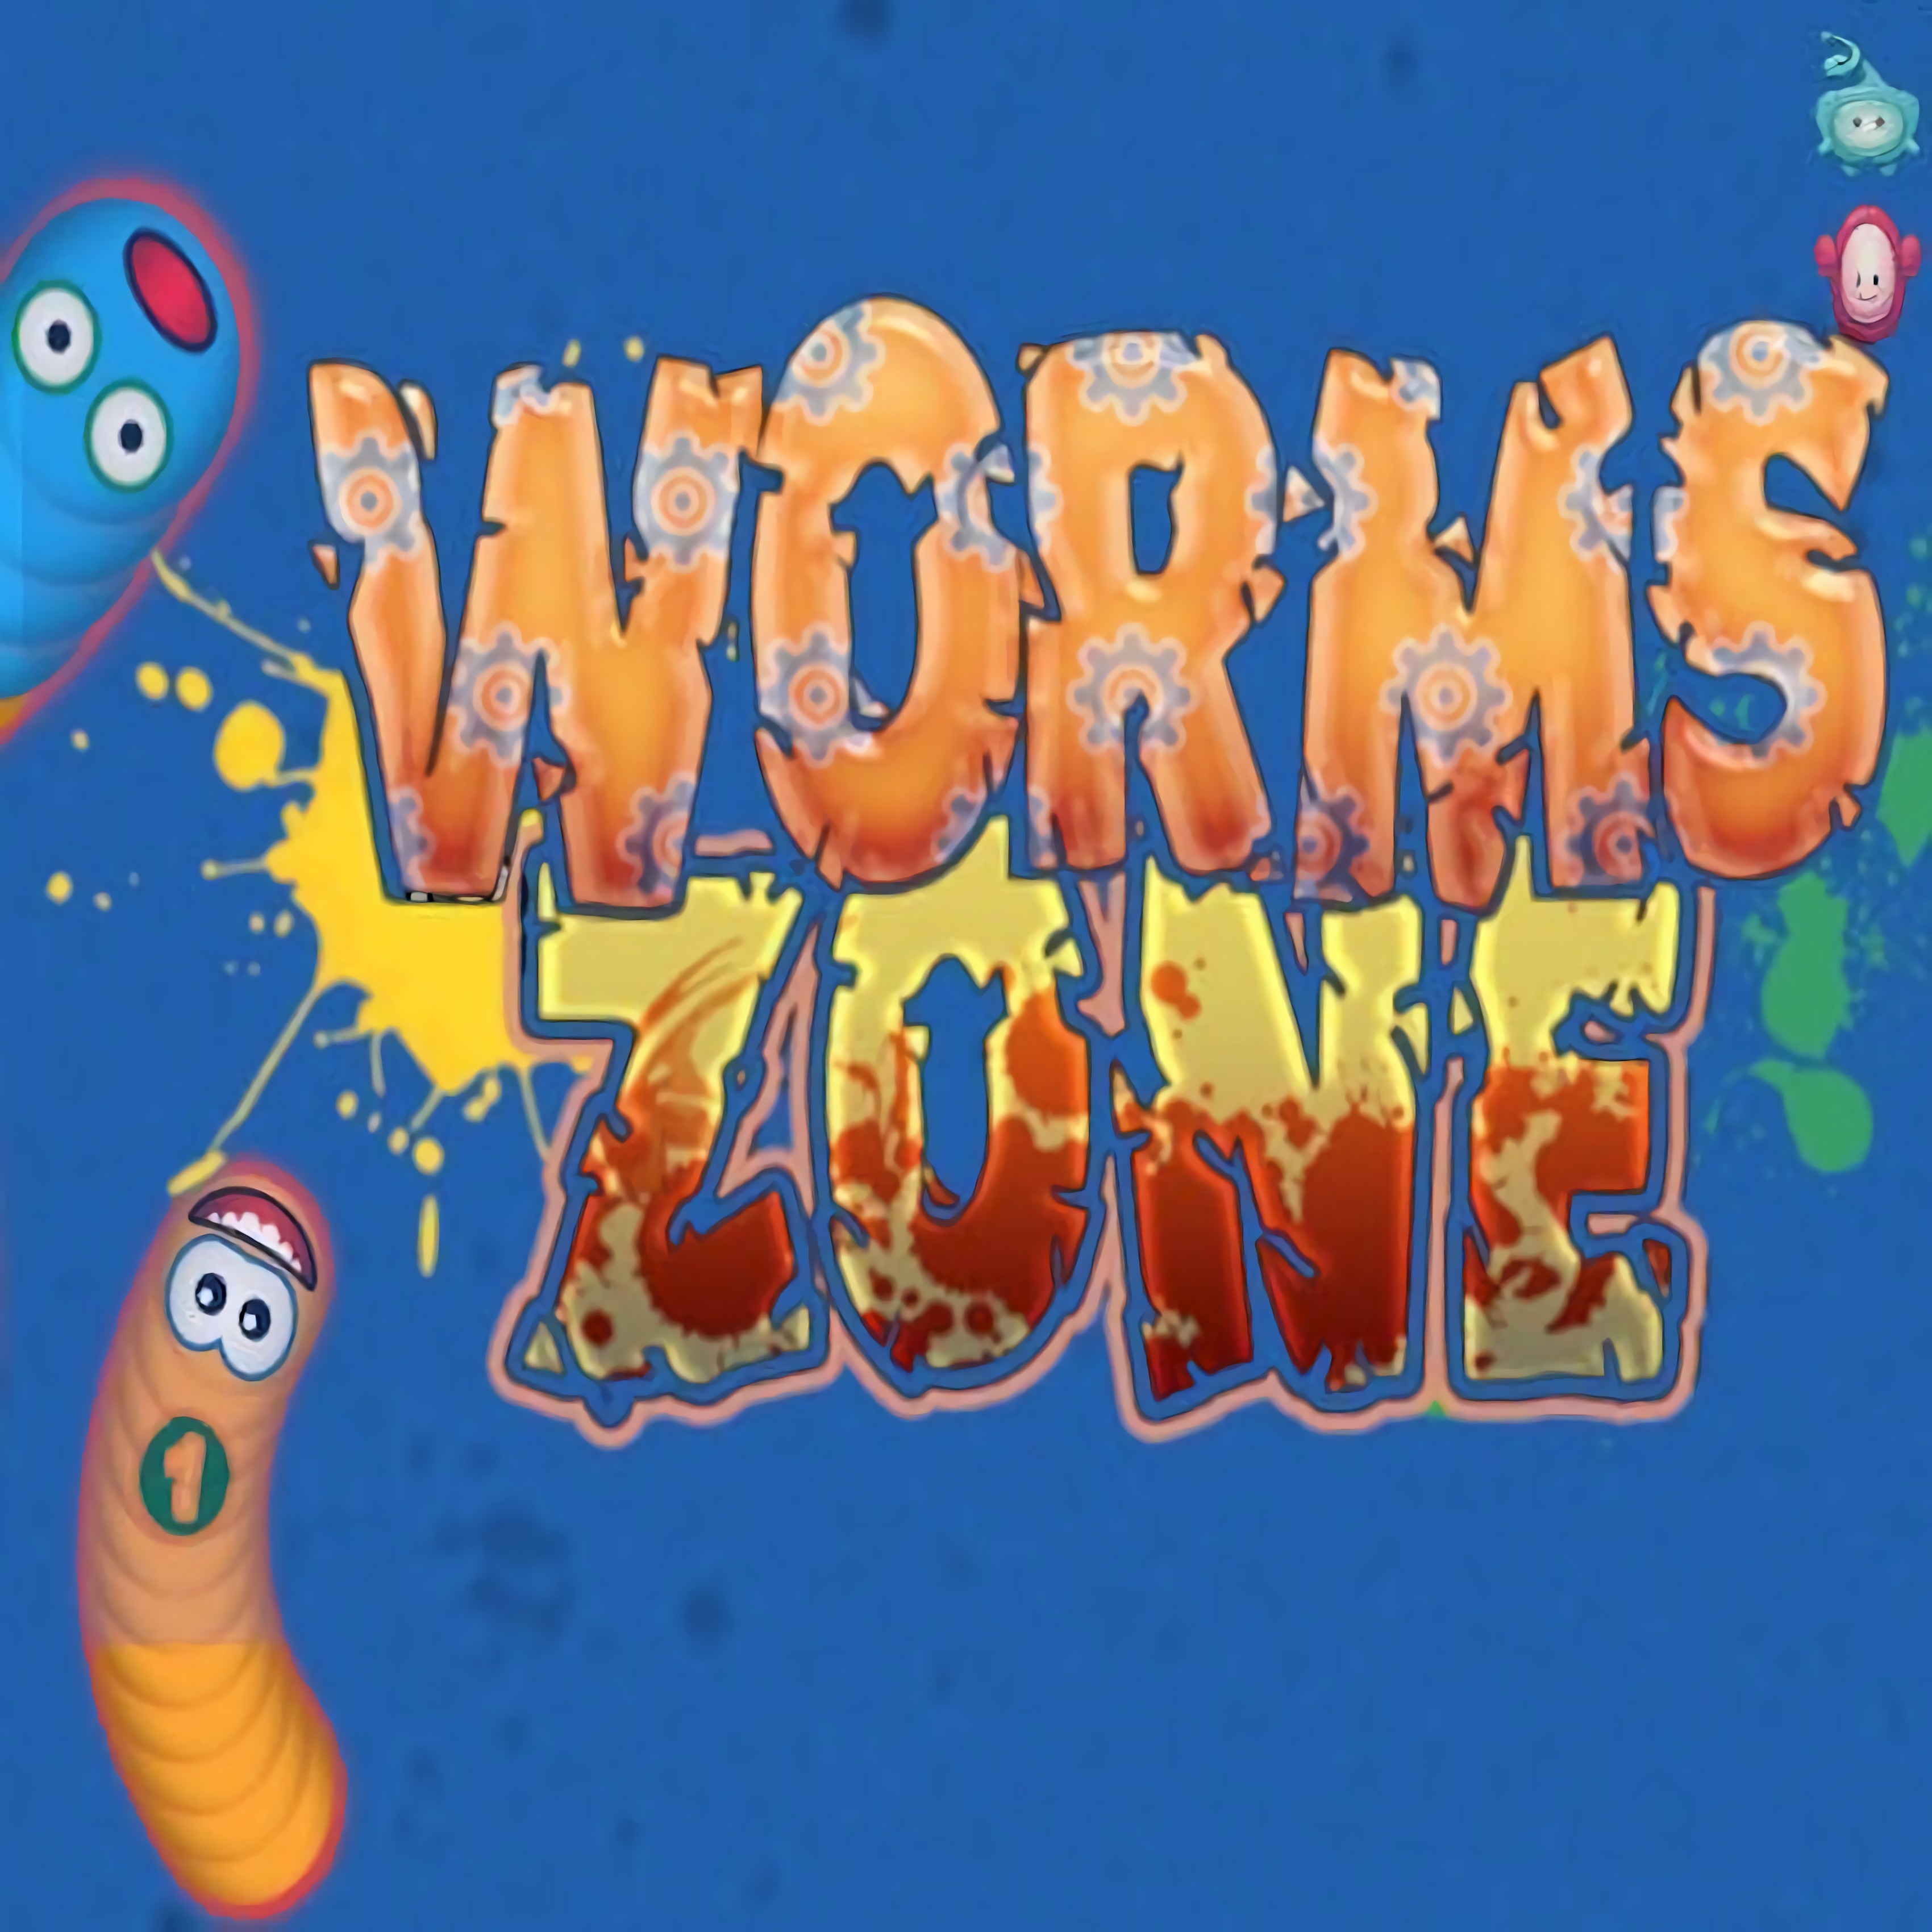 Worms Zone a Slithery Snake